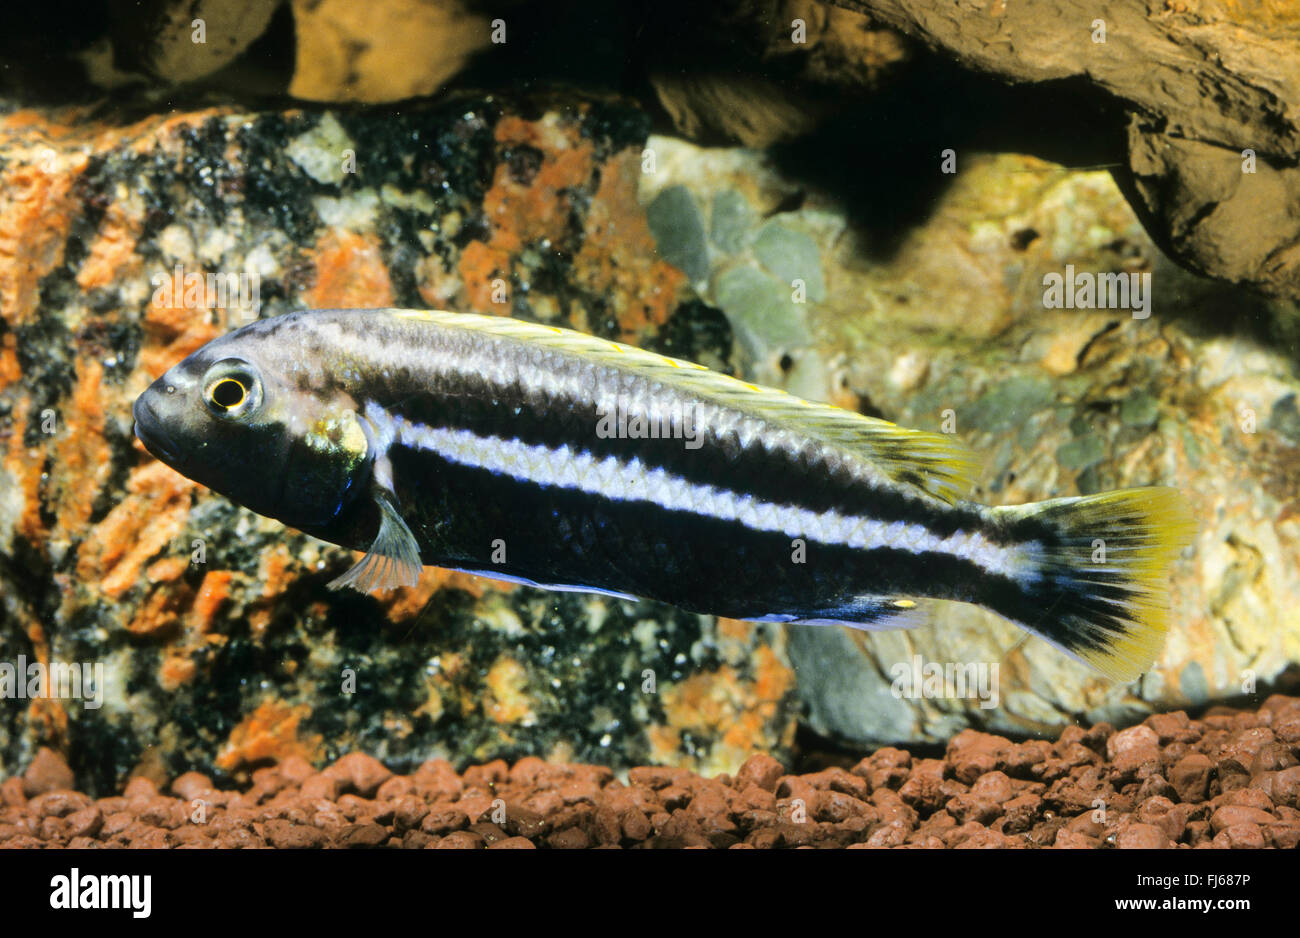 Golden mbuna, Auratus cichlid, Malawi golden cichlid (Melanochromis auratus, Pseudotropheus auratus), male Stock Photo